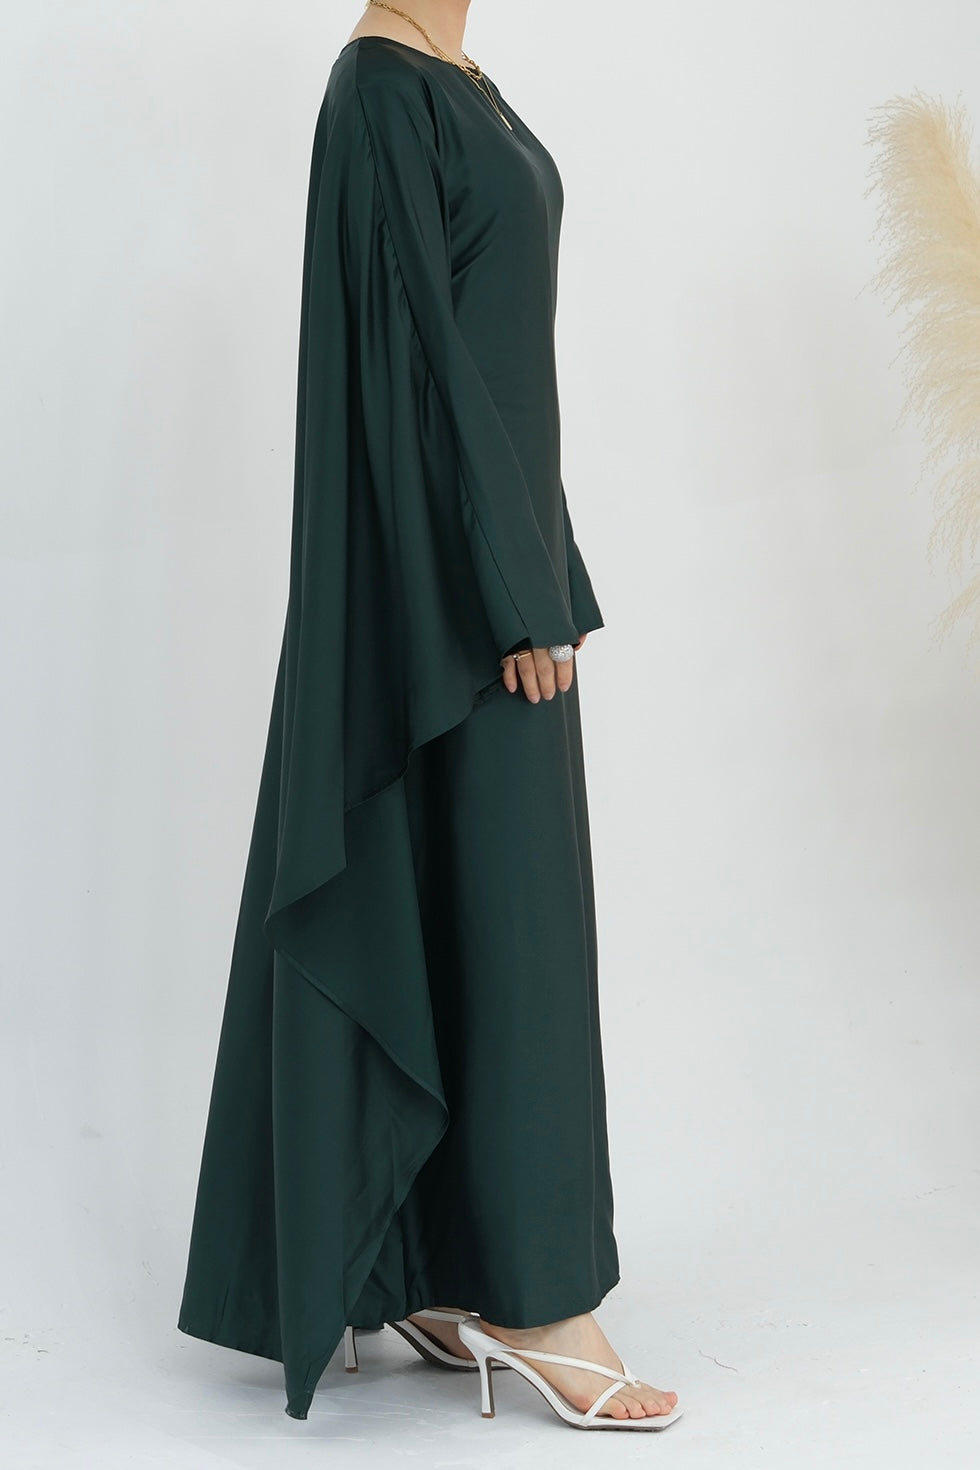 Ella Silky Satin Batwing Butterfly Sleeves Kaftan Maxi Dress Abaya with belt 803- Dark Green